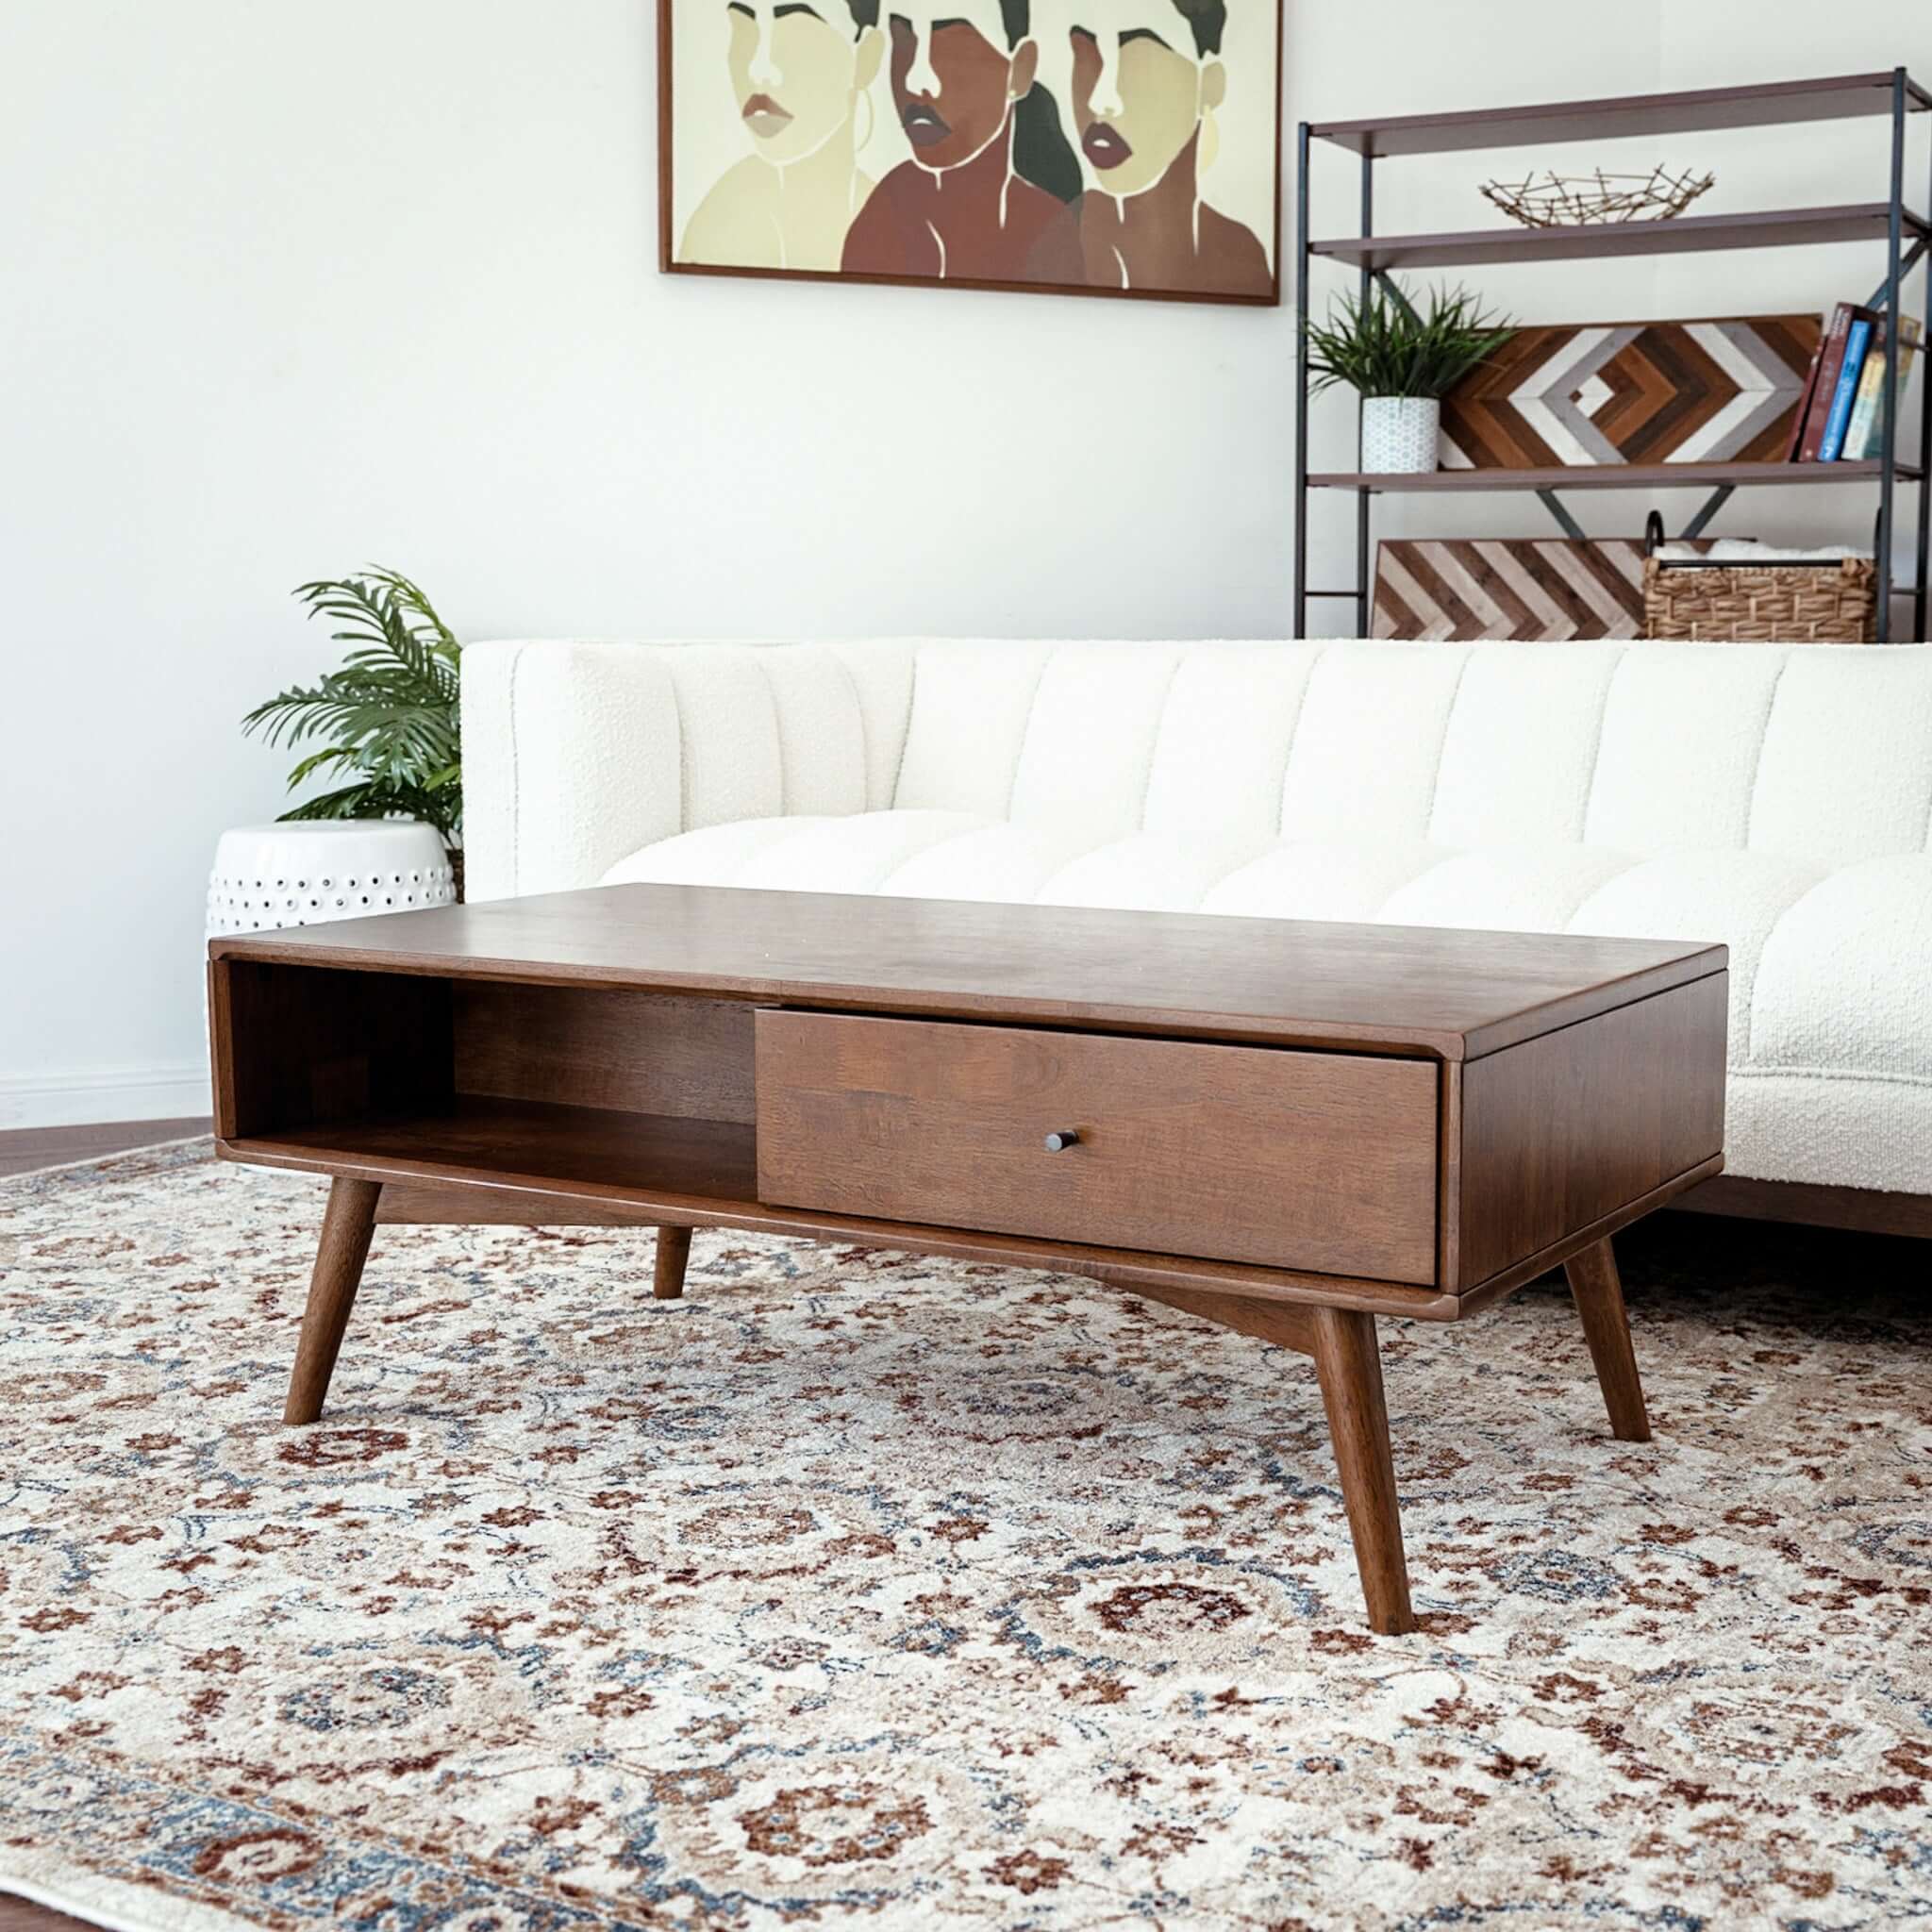 Ashcroft Furniture Caroline Mid Century Modern White TV Stand